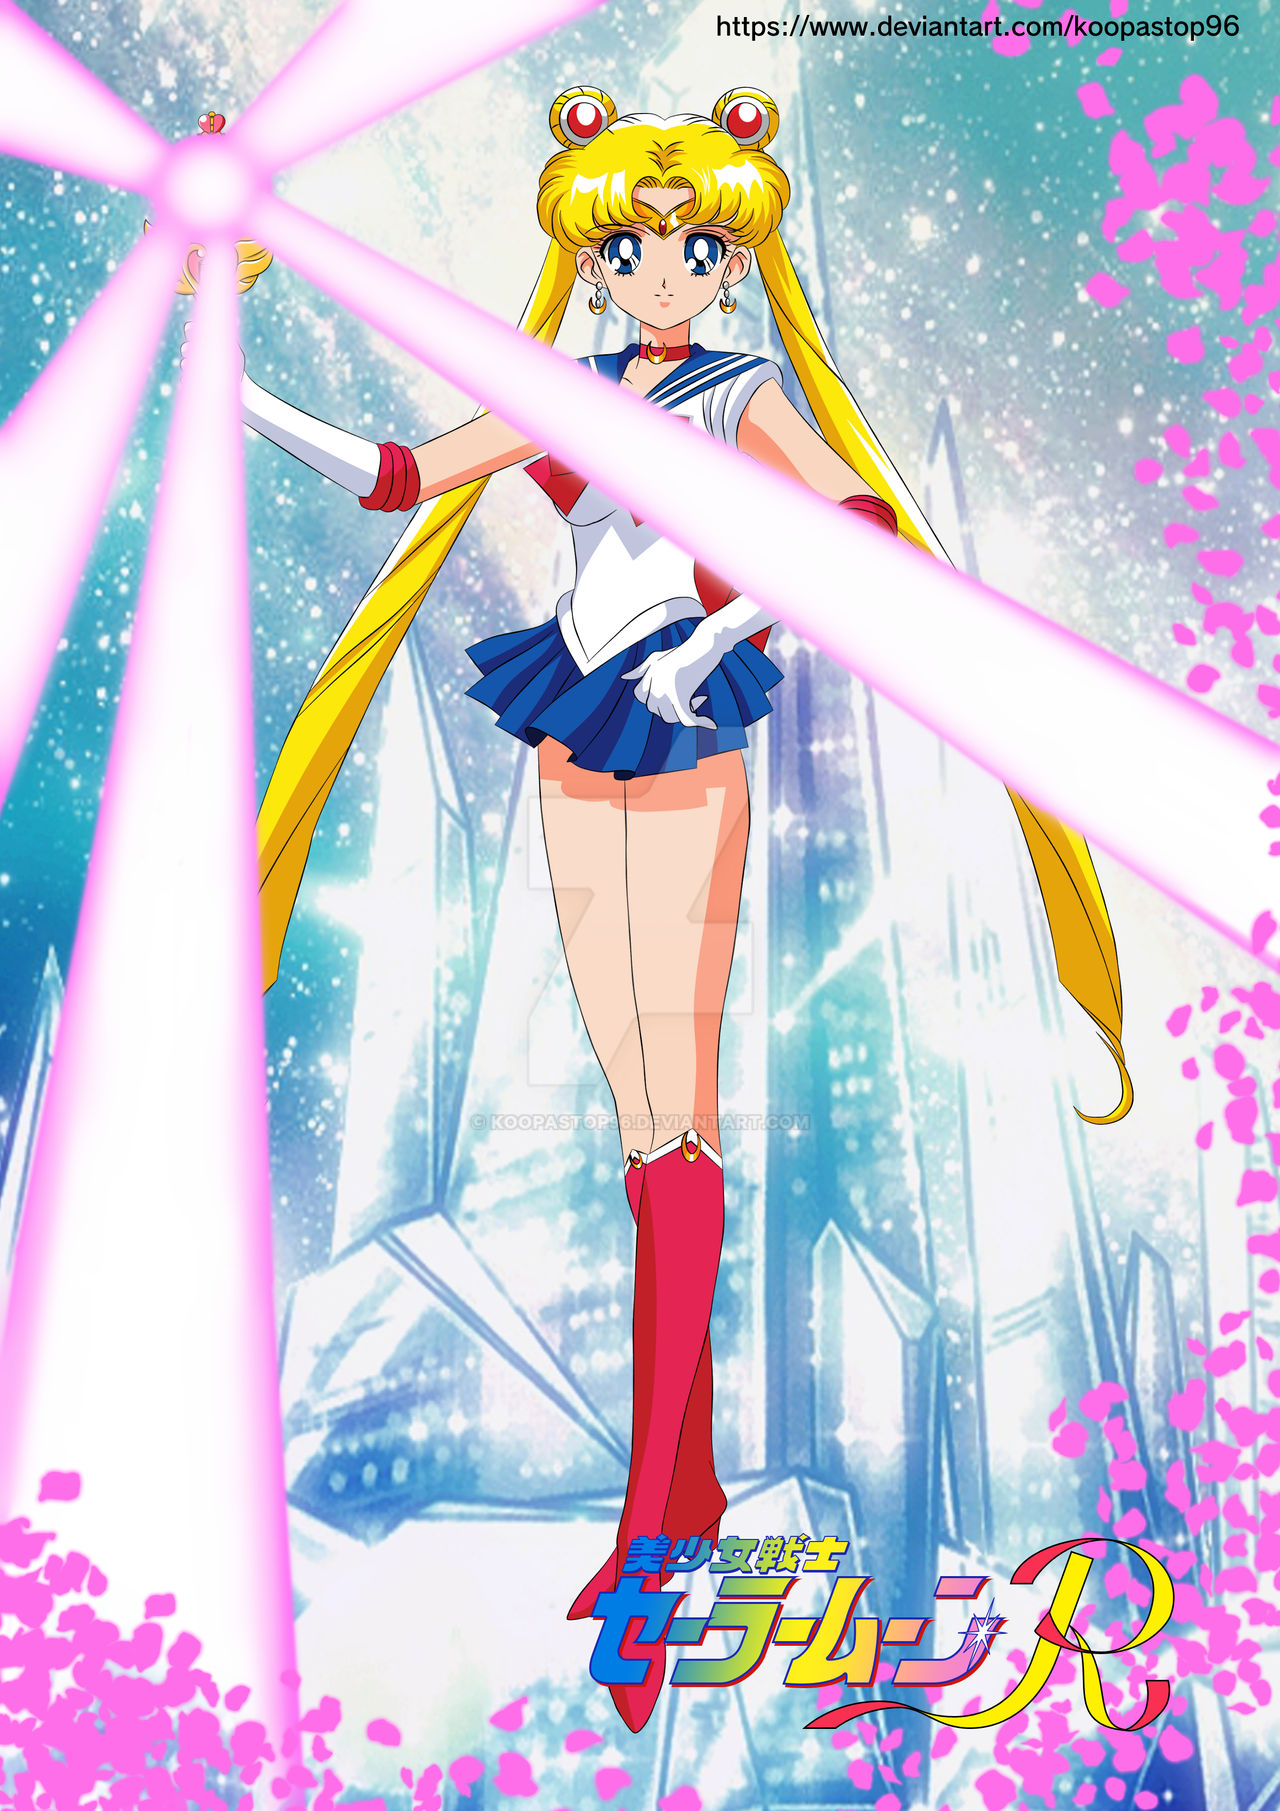 Steam Workshop::Sailor Moon Sad